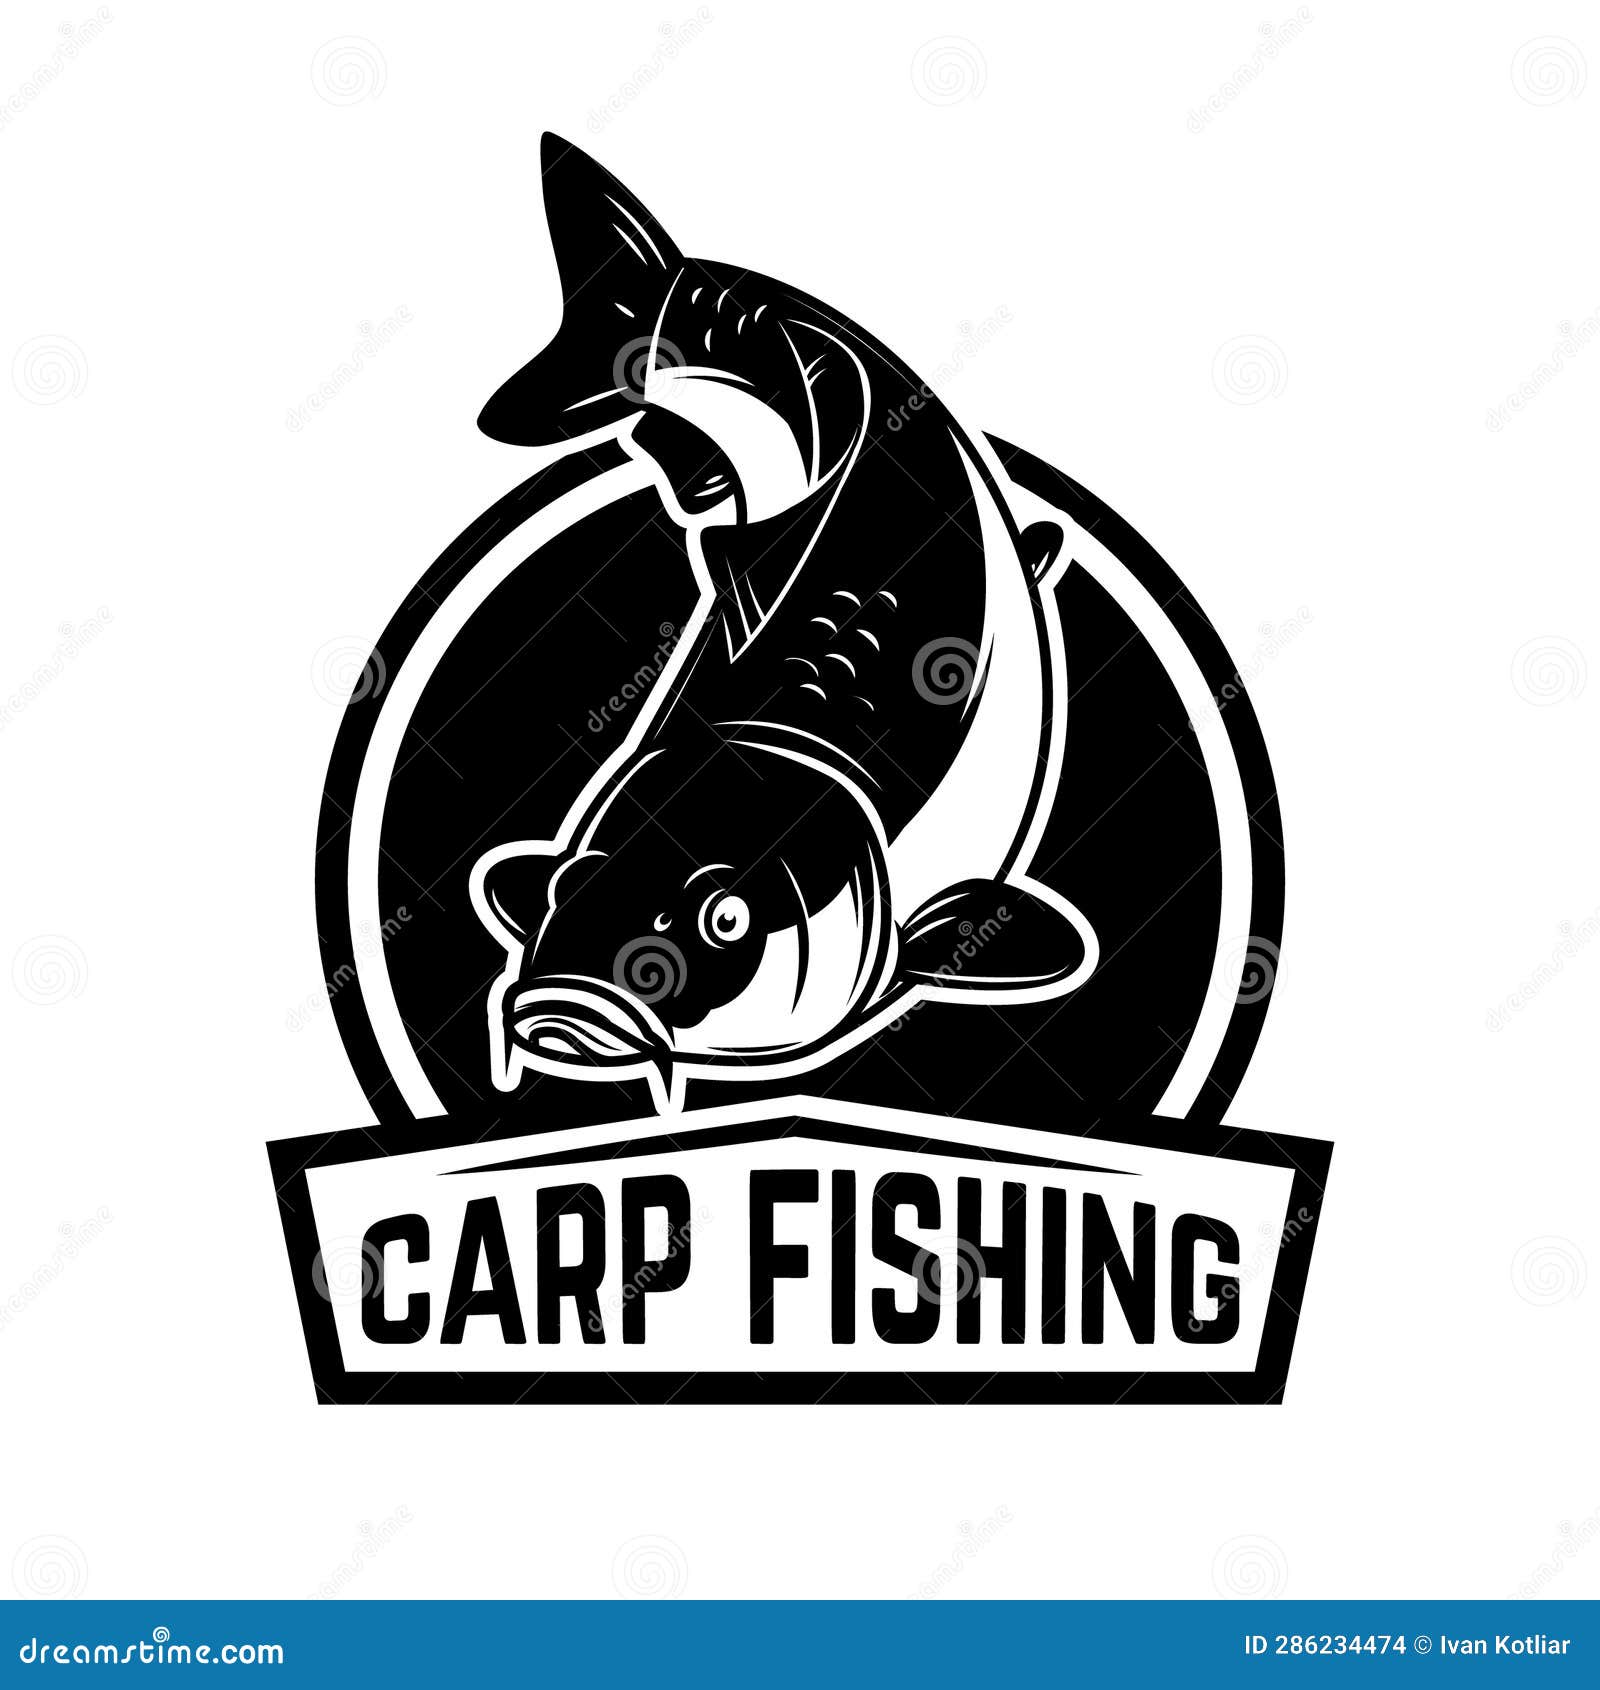 Set of Carp Fishing Emblems in Monochrome Style. Carp Fish Logo, Label,  Sign, Poster, Badge. Stock Vector - Illustration of vector, vintage:  286234474